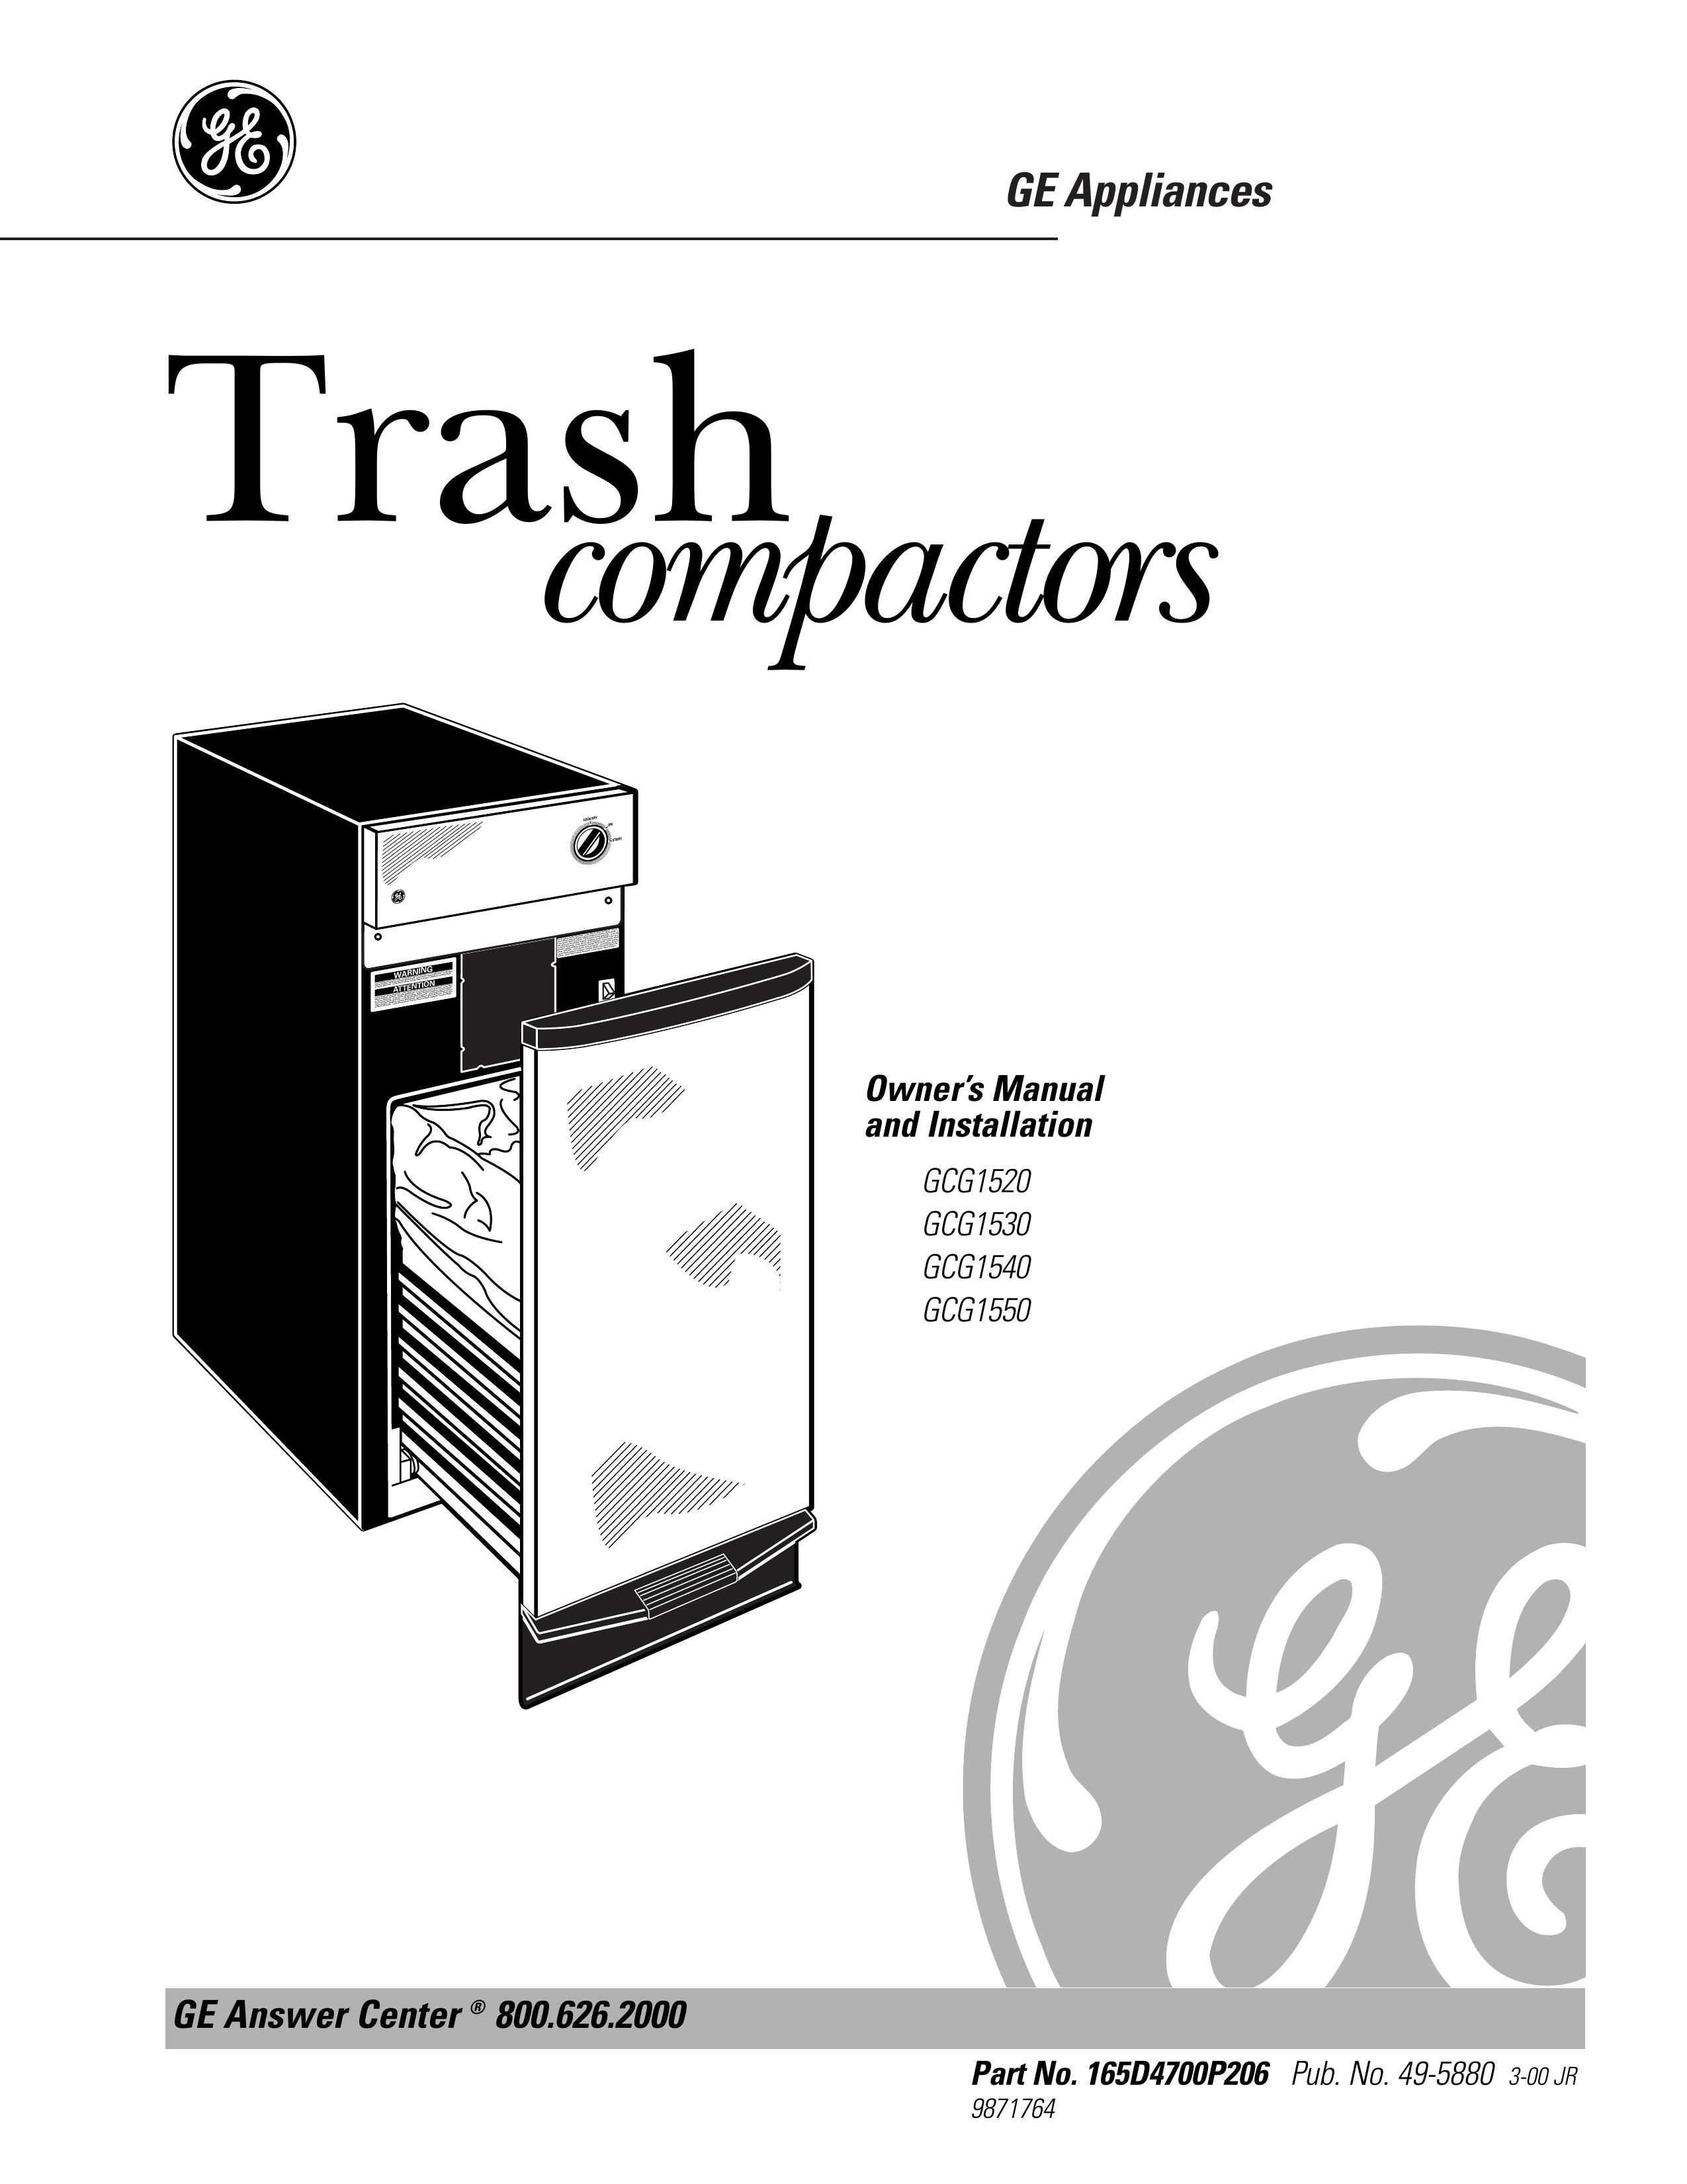 GE GCG1530 Trash Compactor User Manual